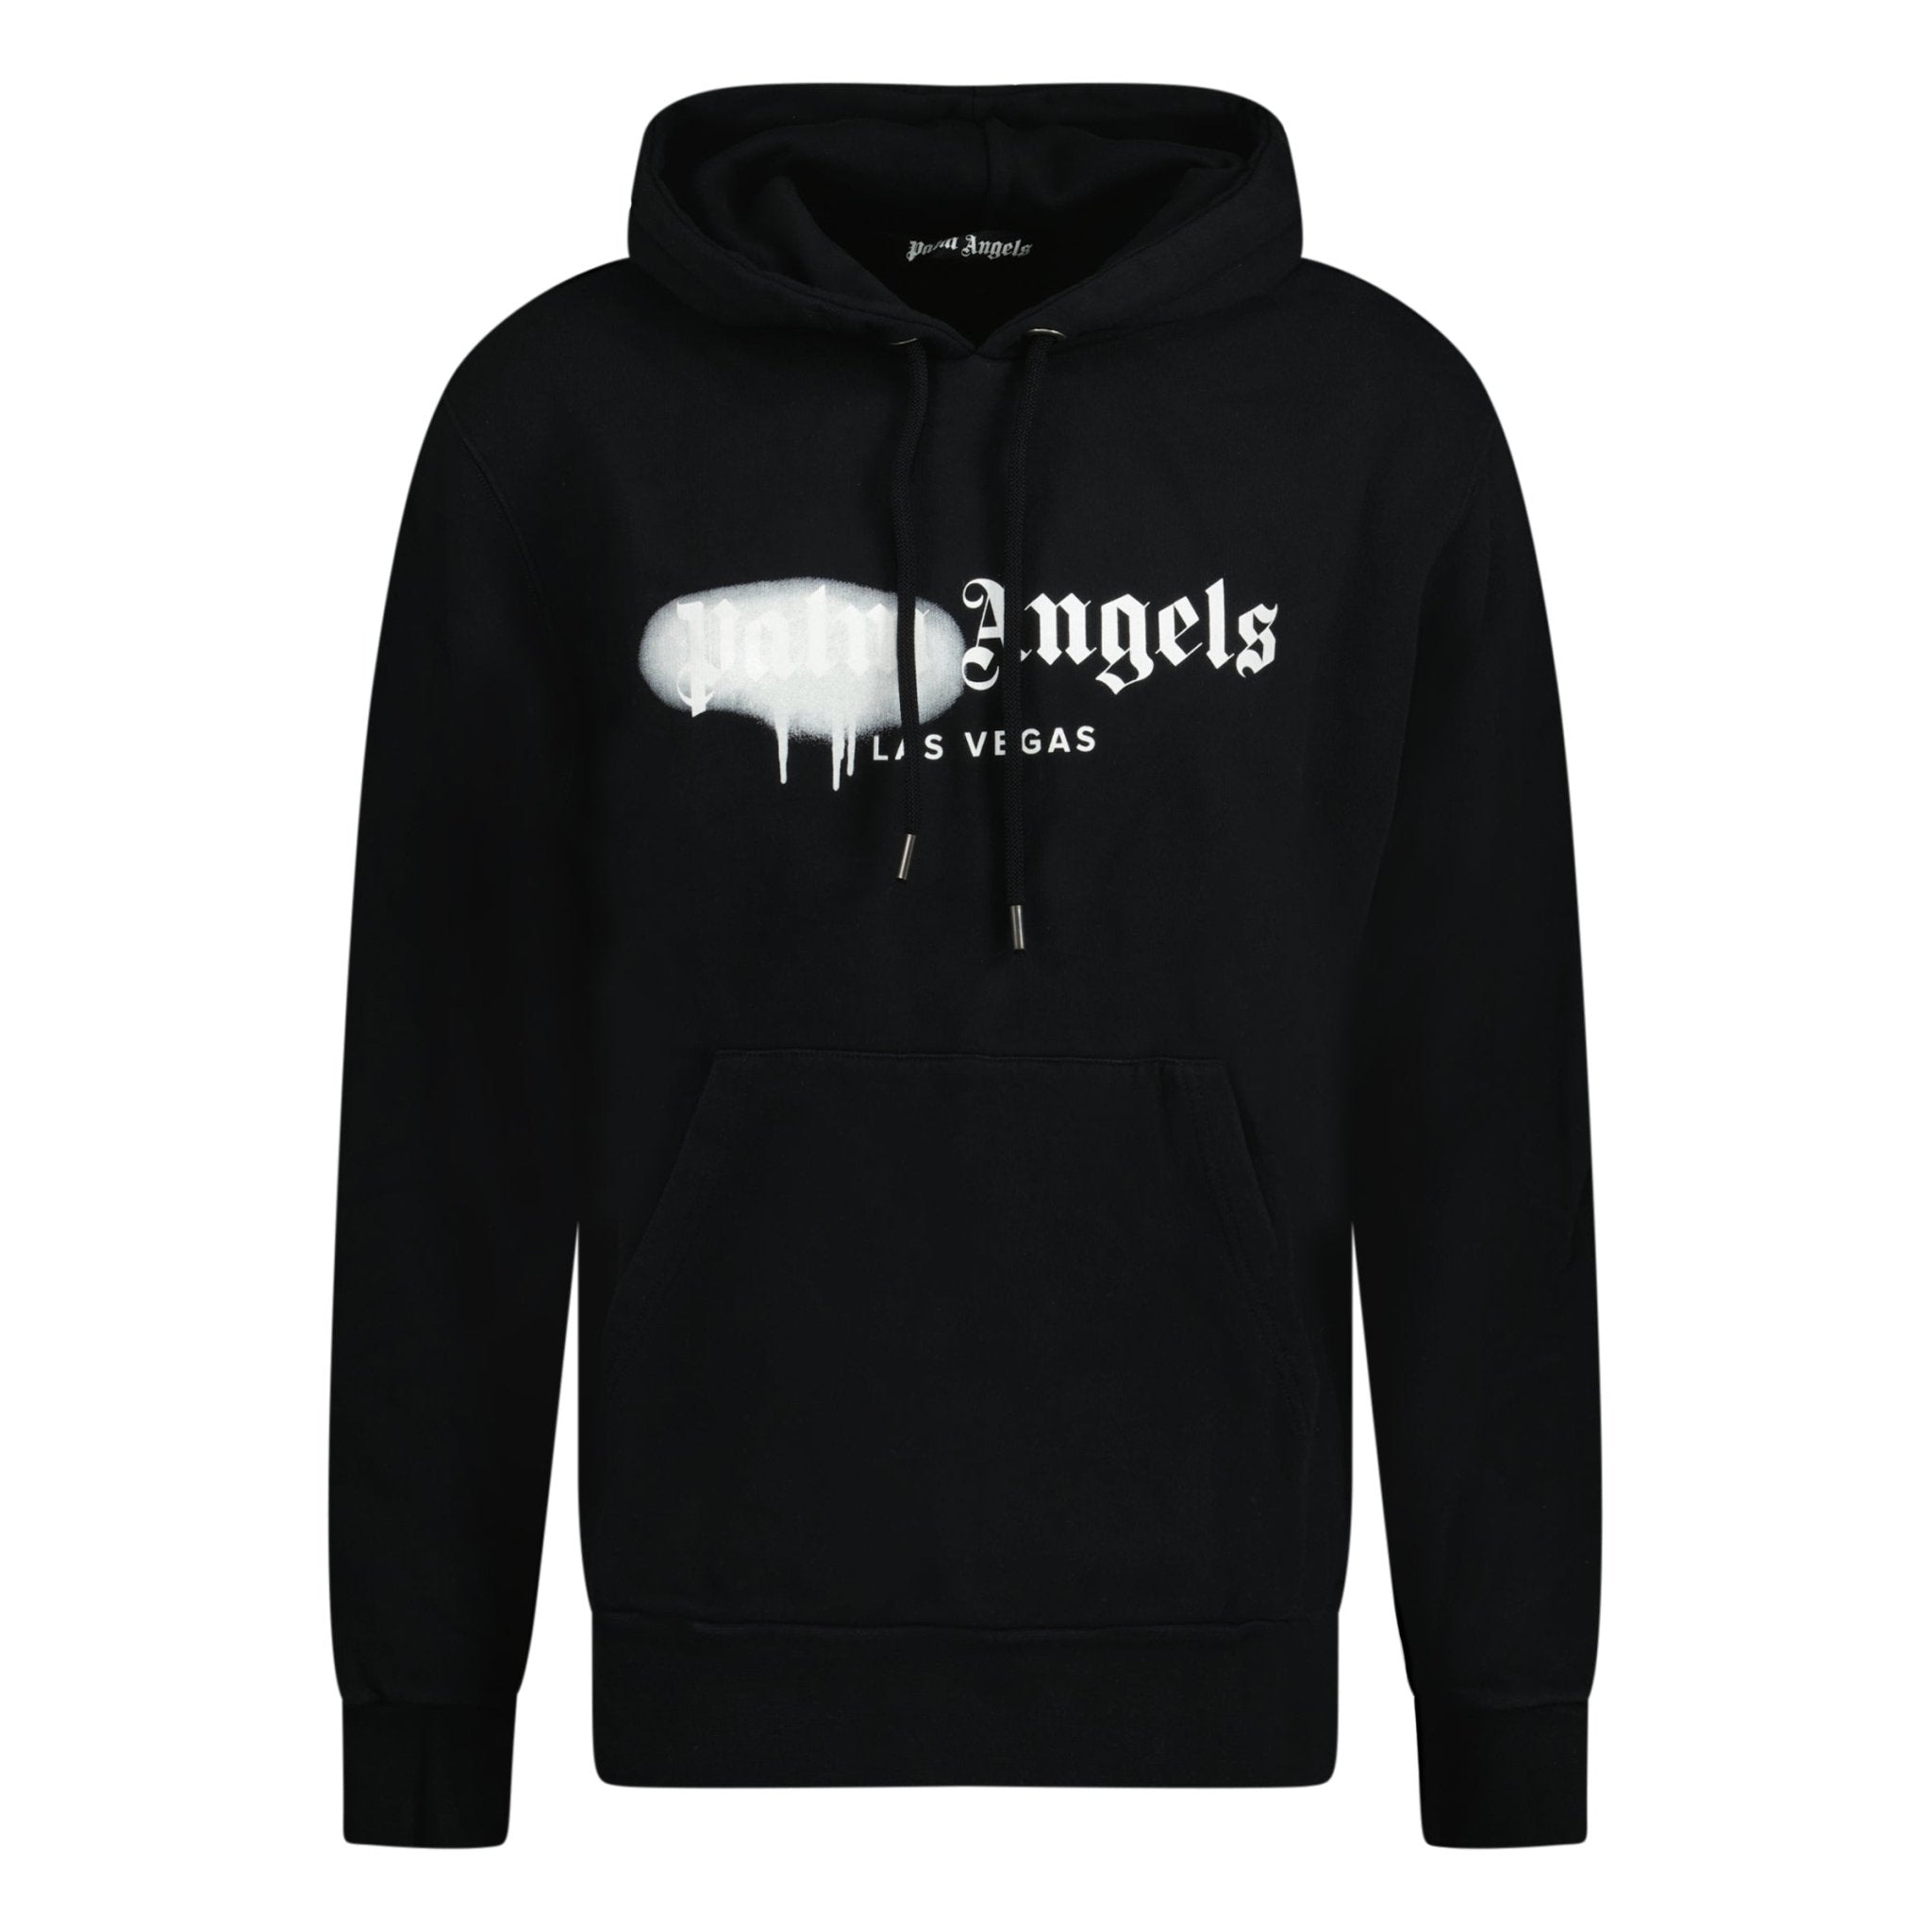 Palm Angels Las Vegas Sprayed Logo Hooded Sweatshirt Black